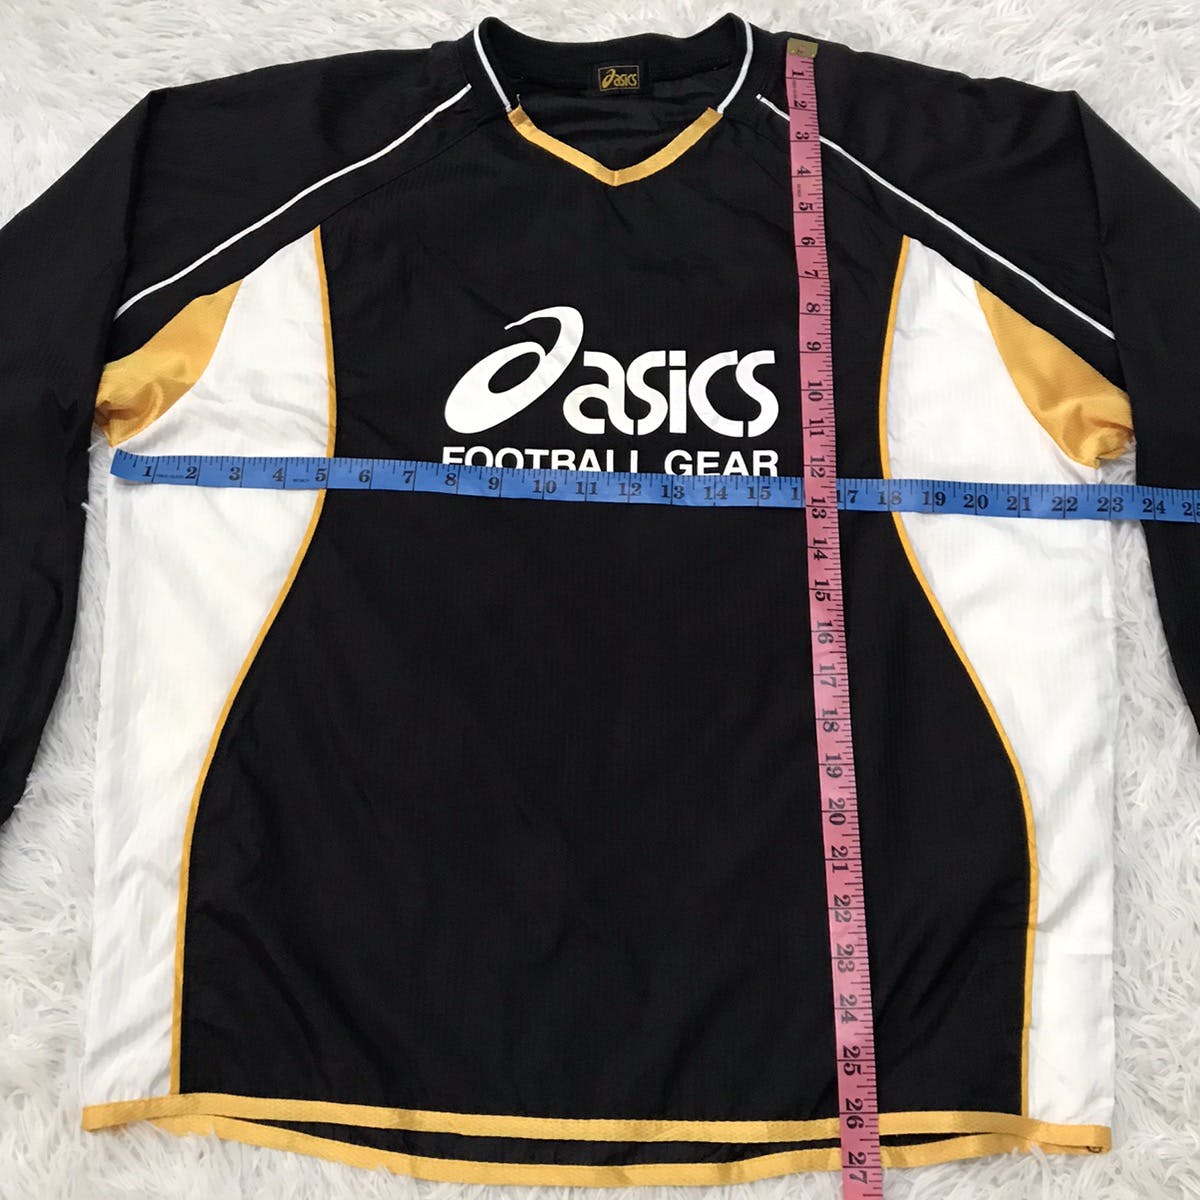 Asics football gear long sleeves - 6